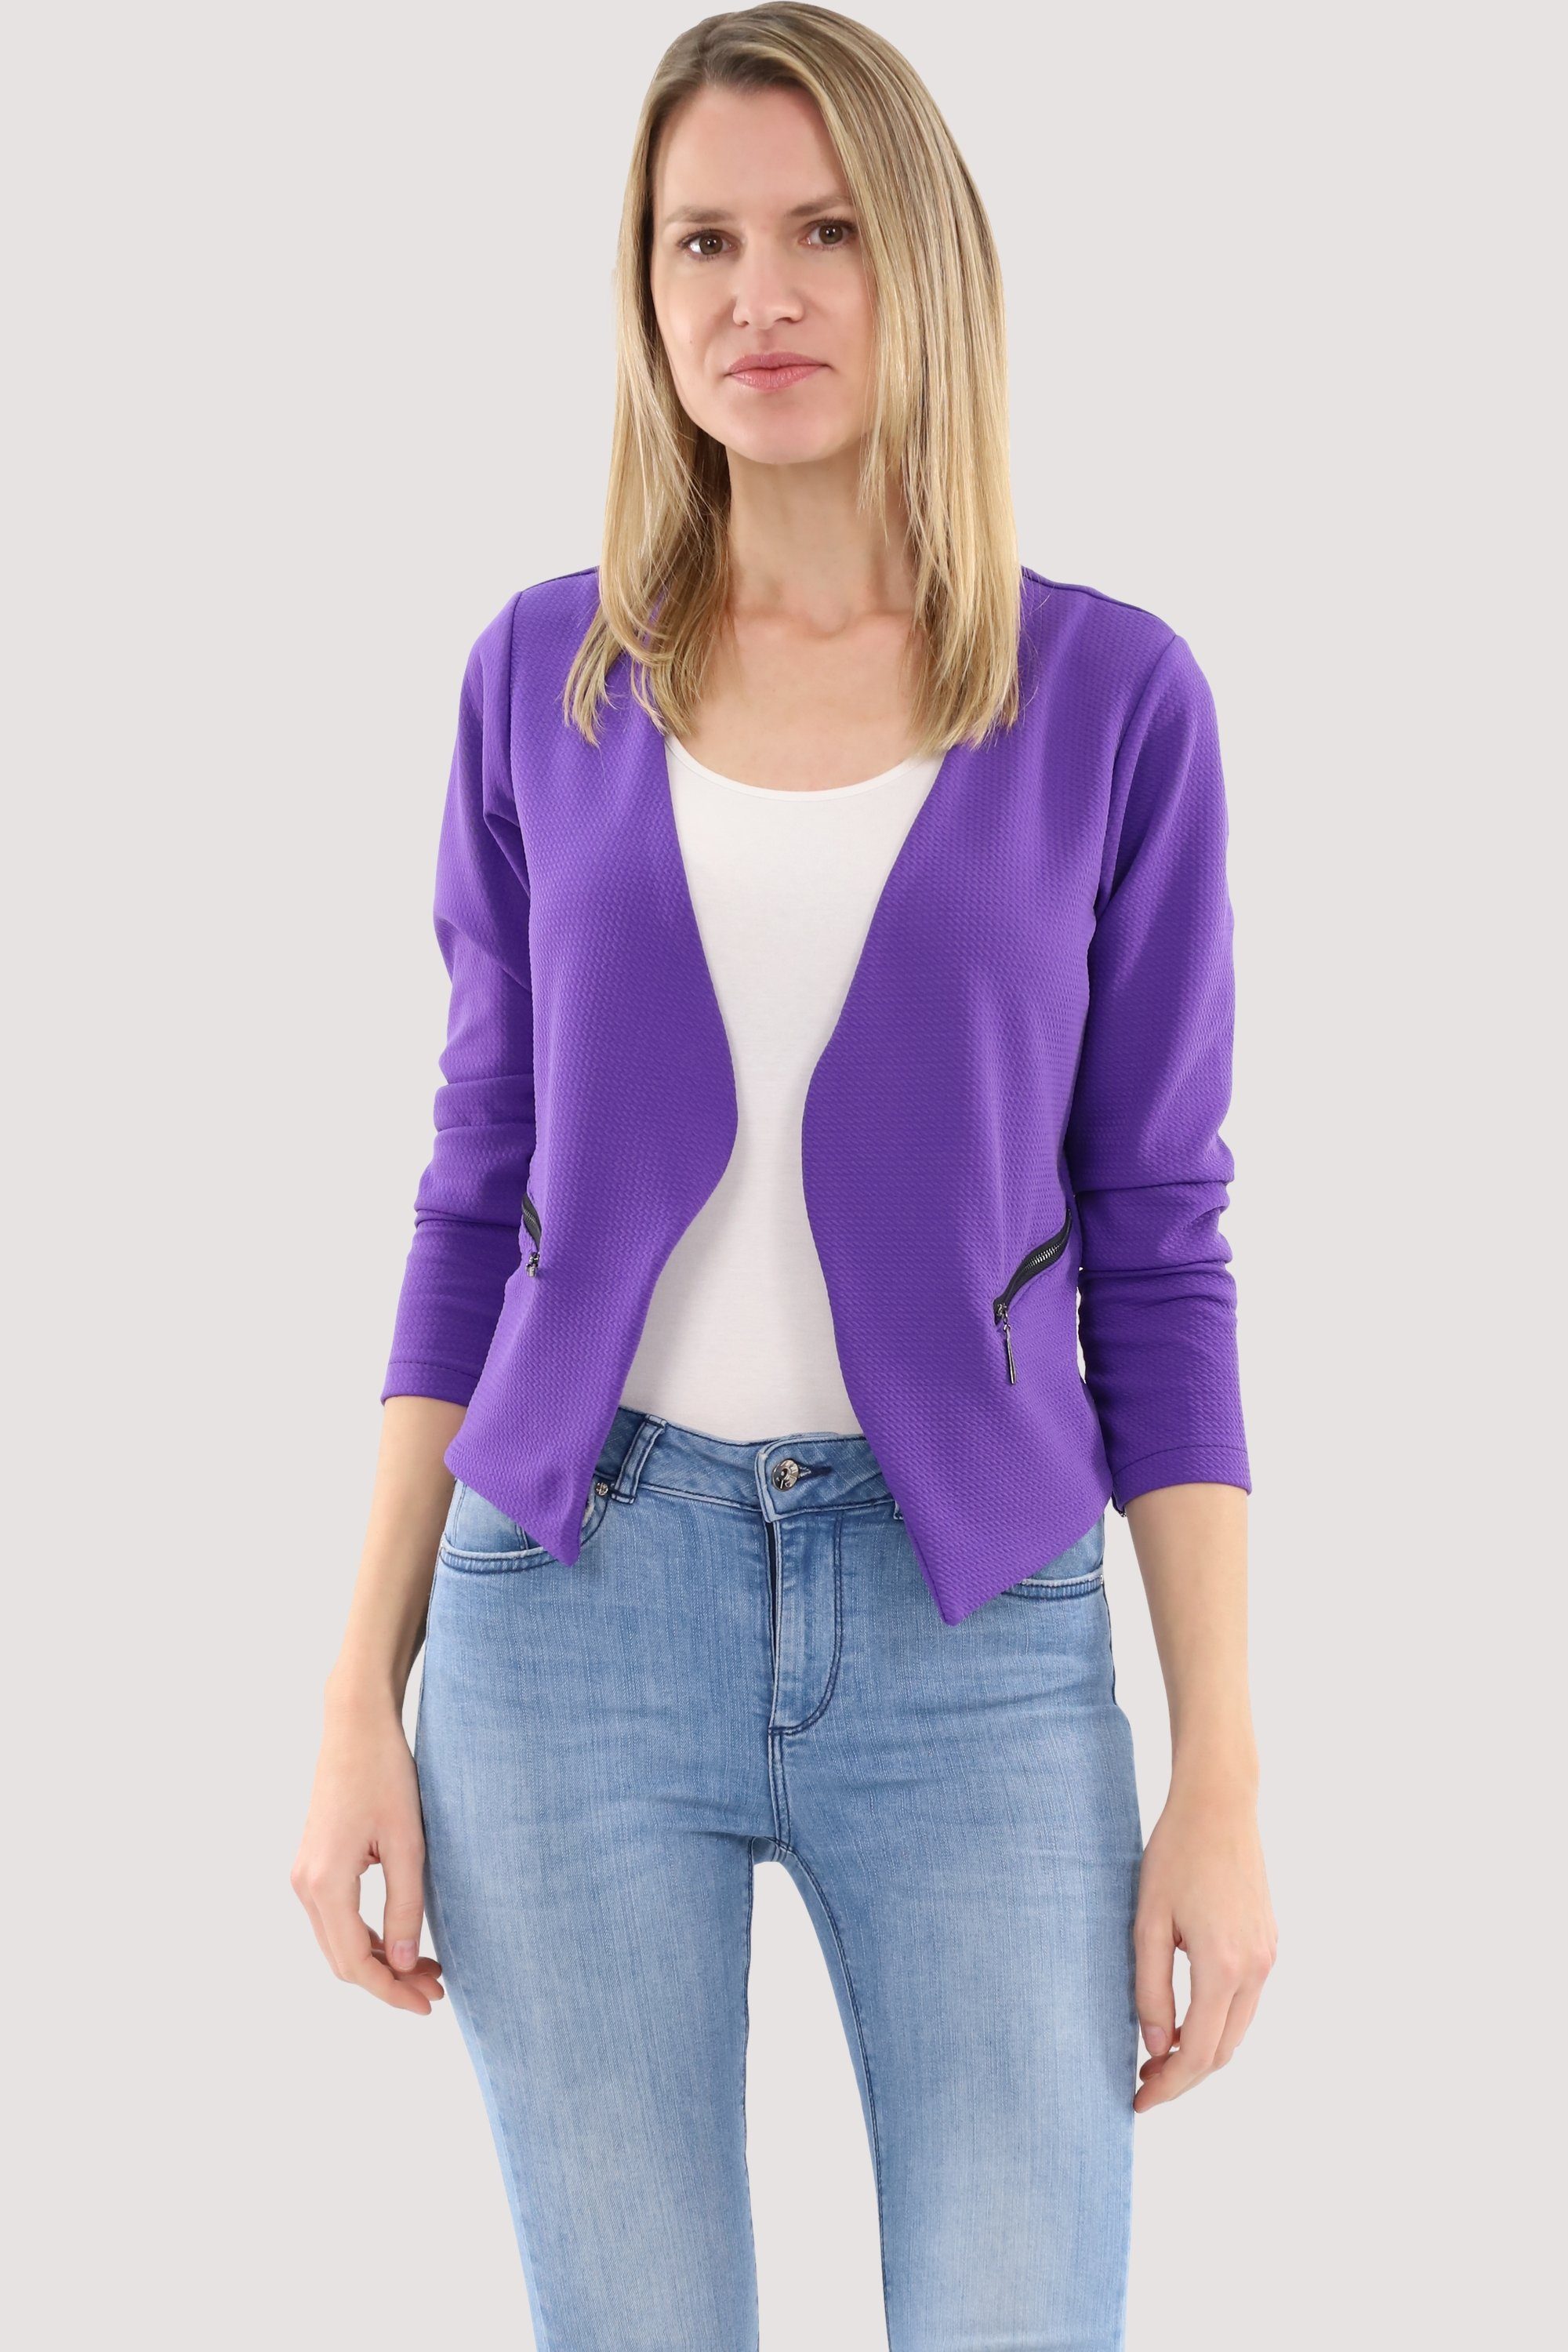 than fashion 6040 Sweatblazer Basic-Look im malito violett Jackenblazer more